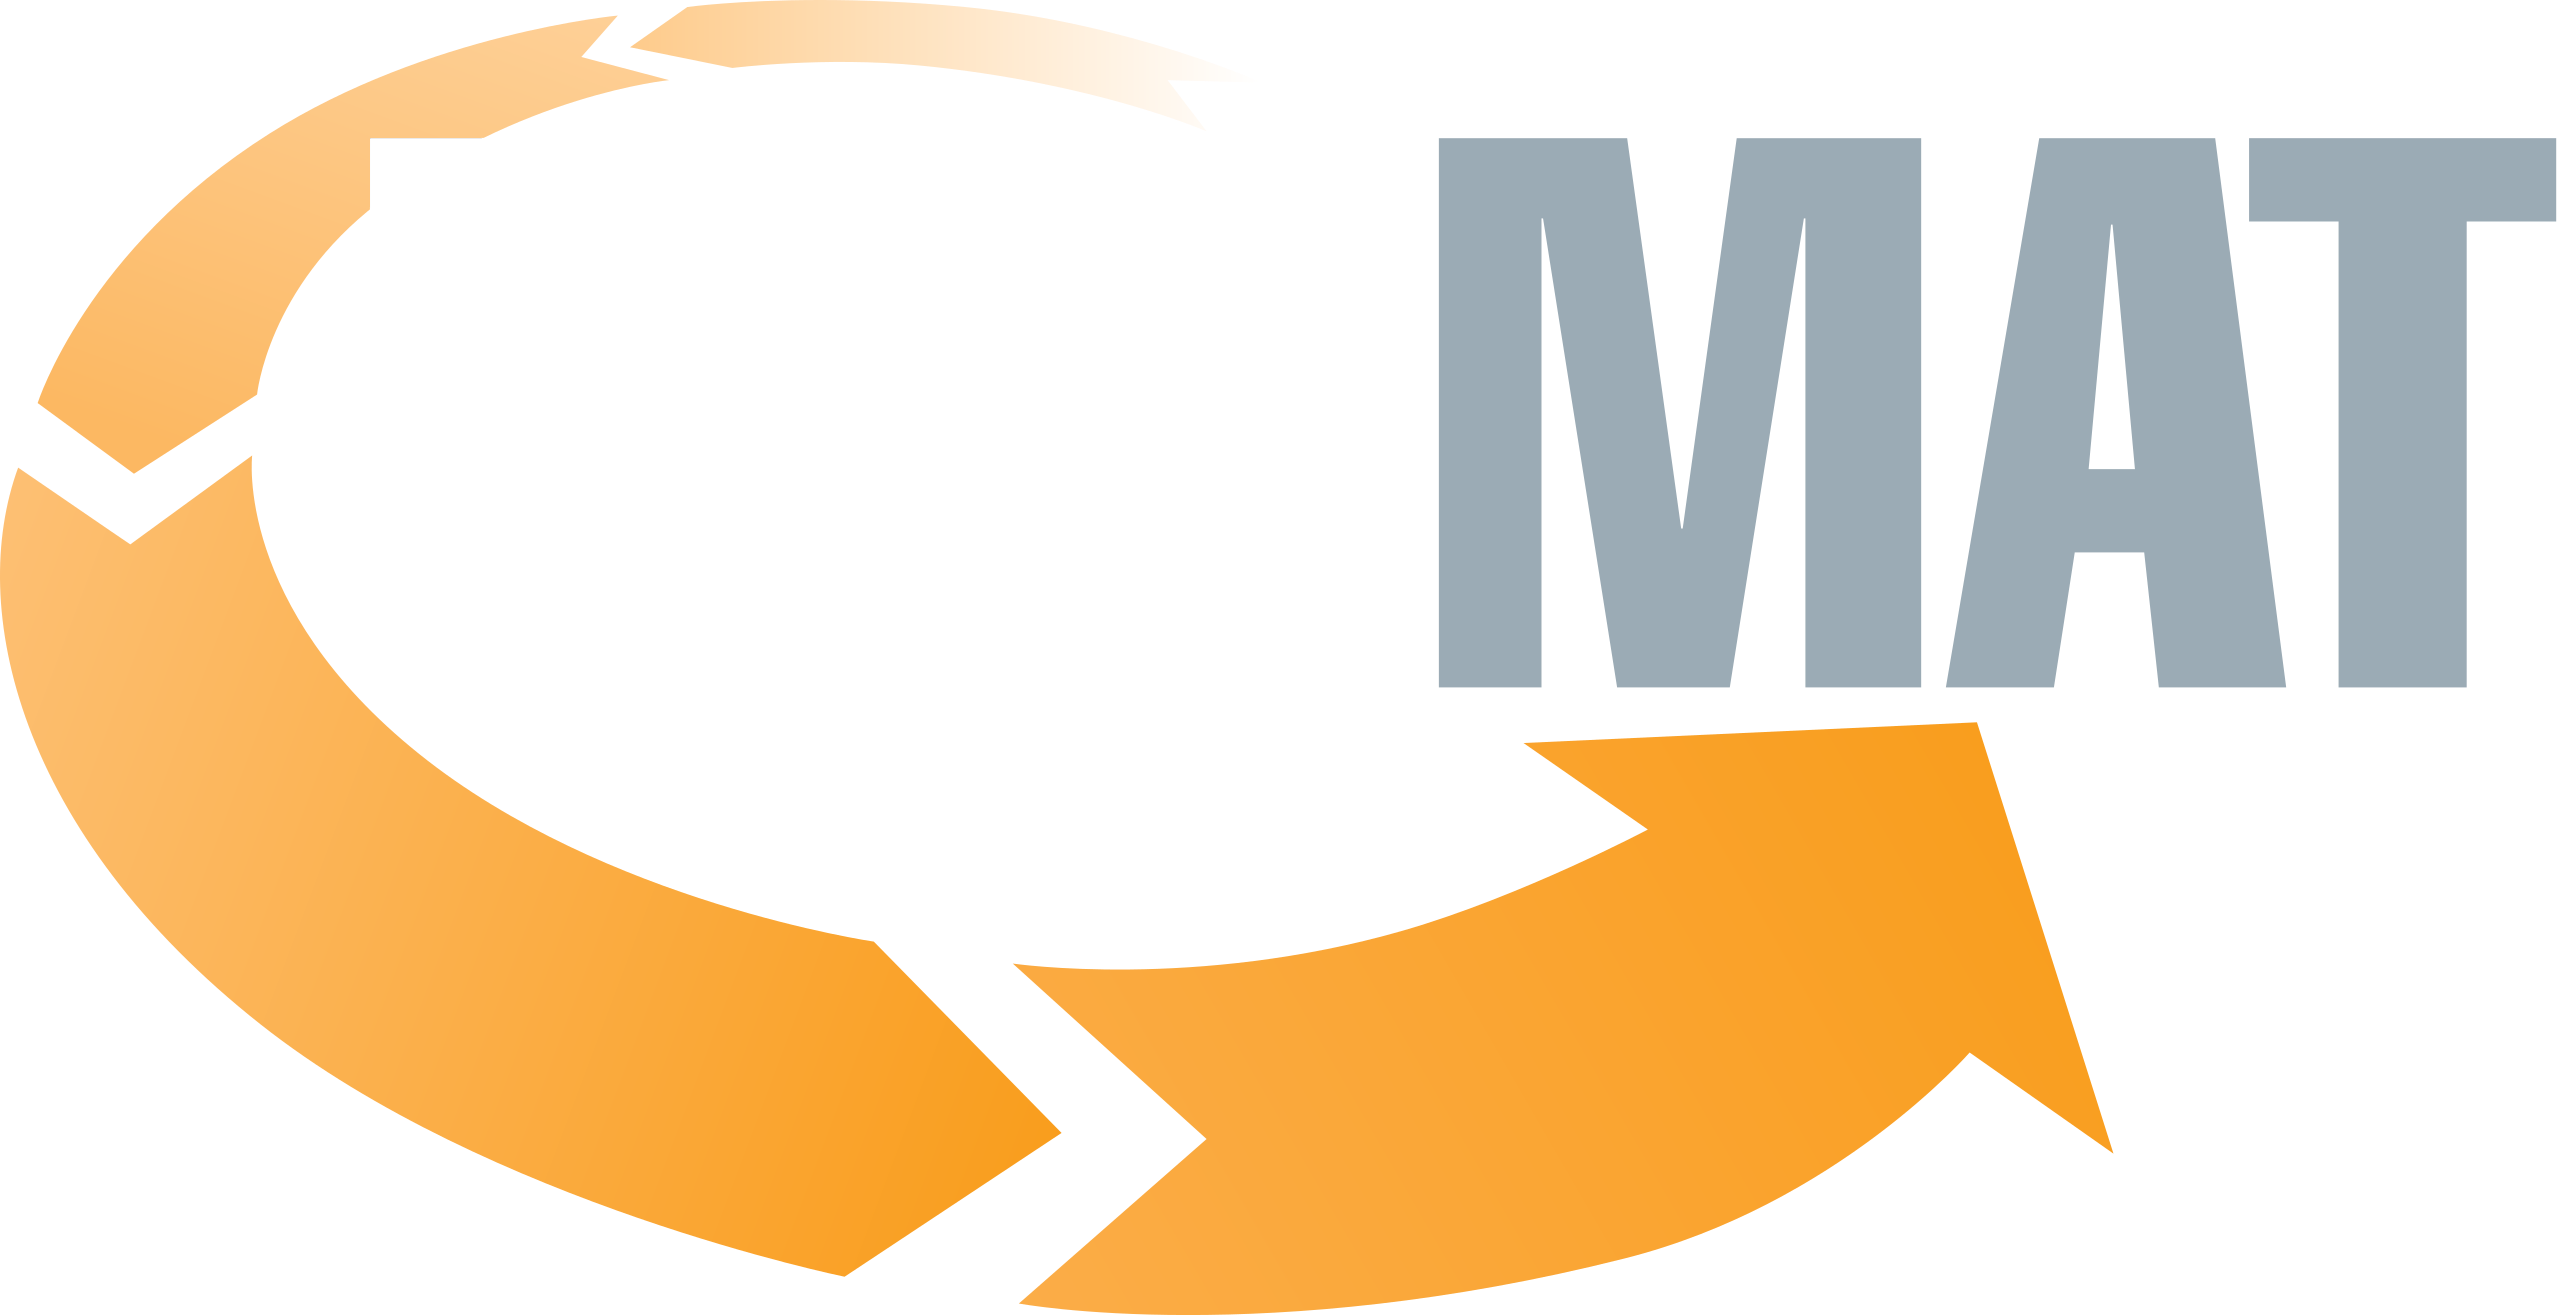 LogiMAT Logo